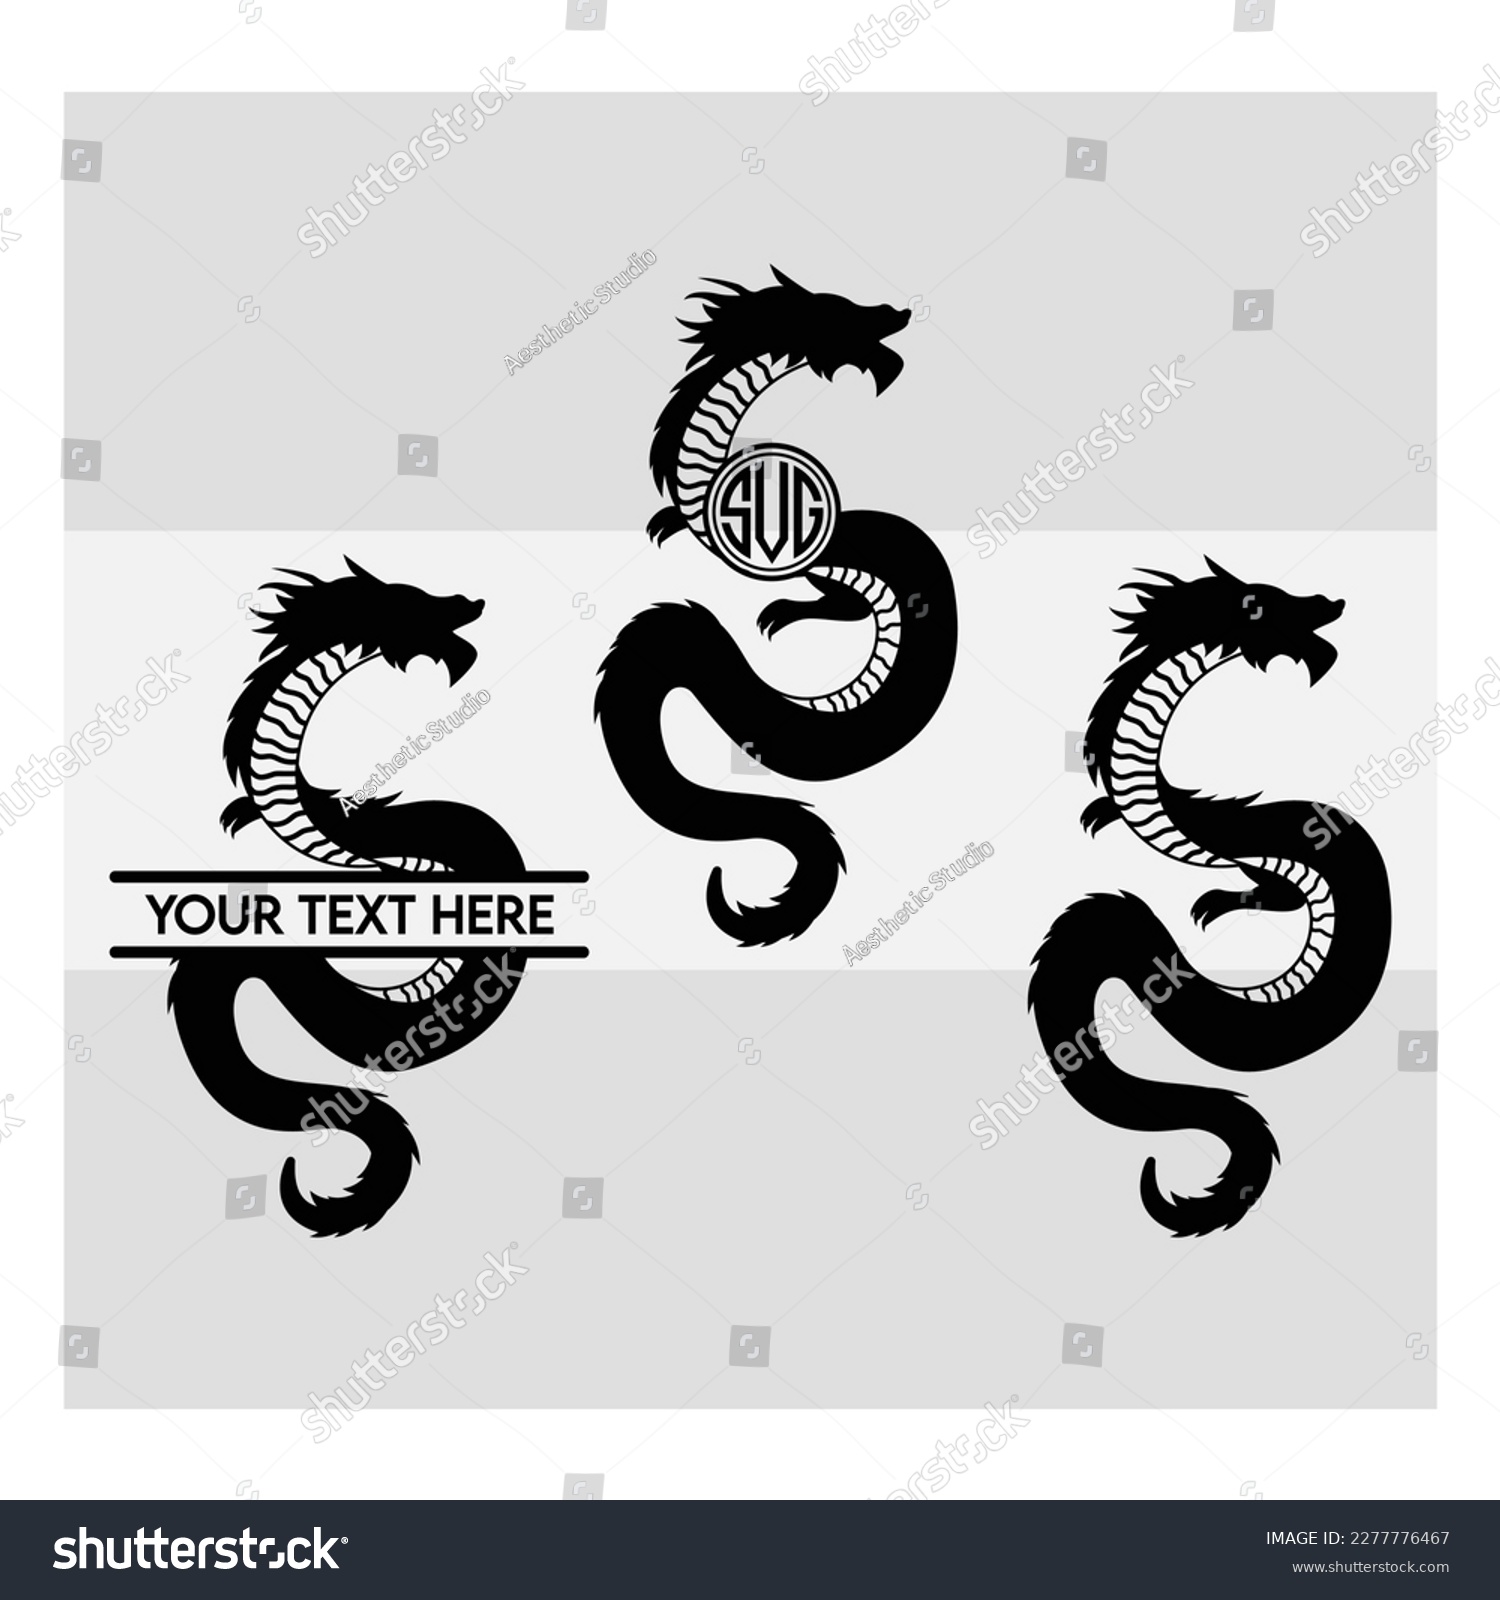 SVG of Dragon SVG, Dragon, Dragon Flying, Dragons Head, Animal, Dragon Vector, Winged , Silhouette svg